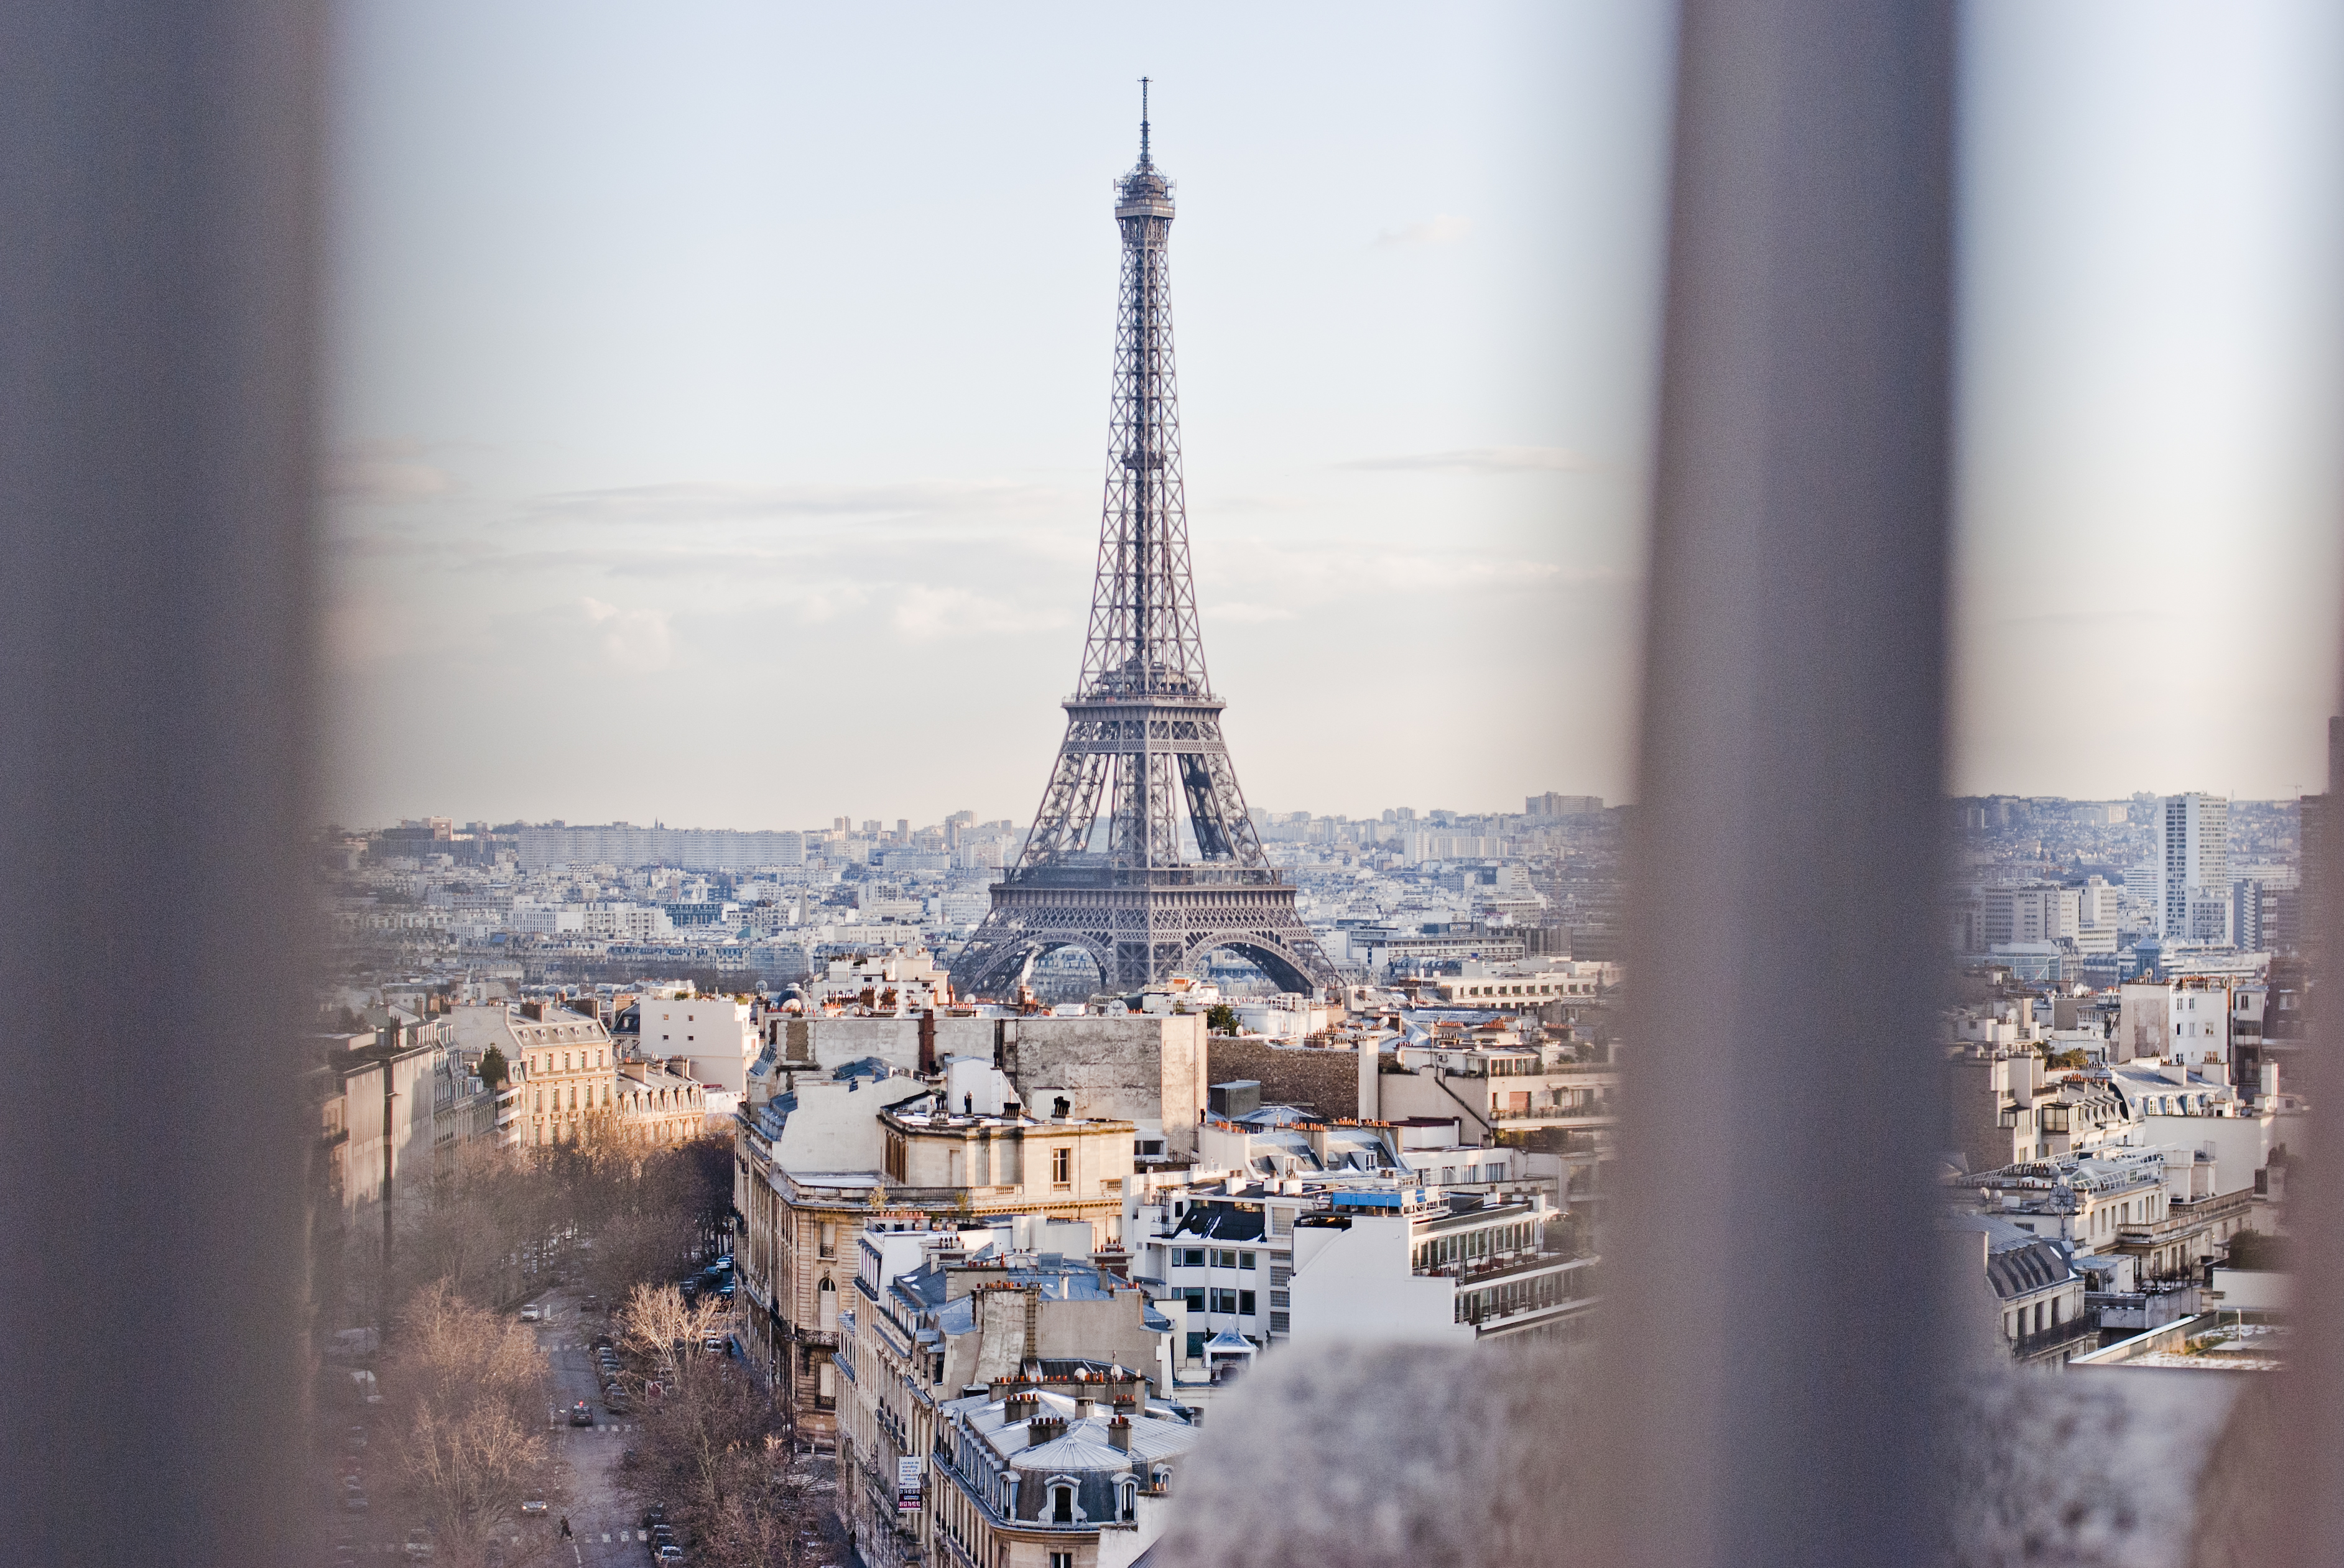 Вид на париж с эйфелевой башни. Париж вид на Эйфелеву башню. Париж вид из окна на Эйфелеву башню. Париж Эстетика эльфелева башня. Окно с видом на Париж.